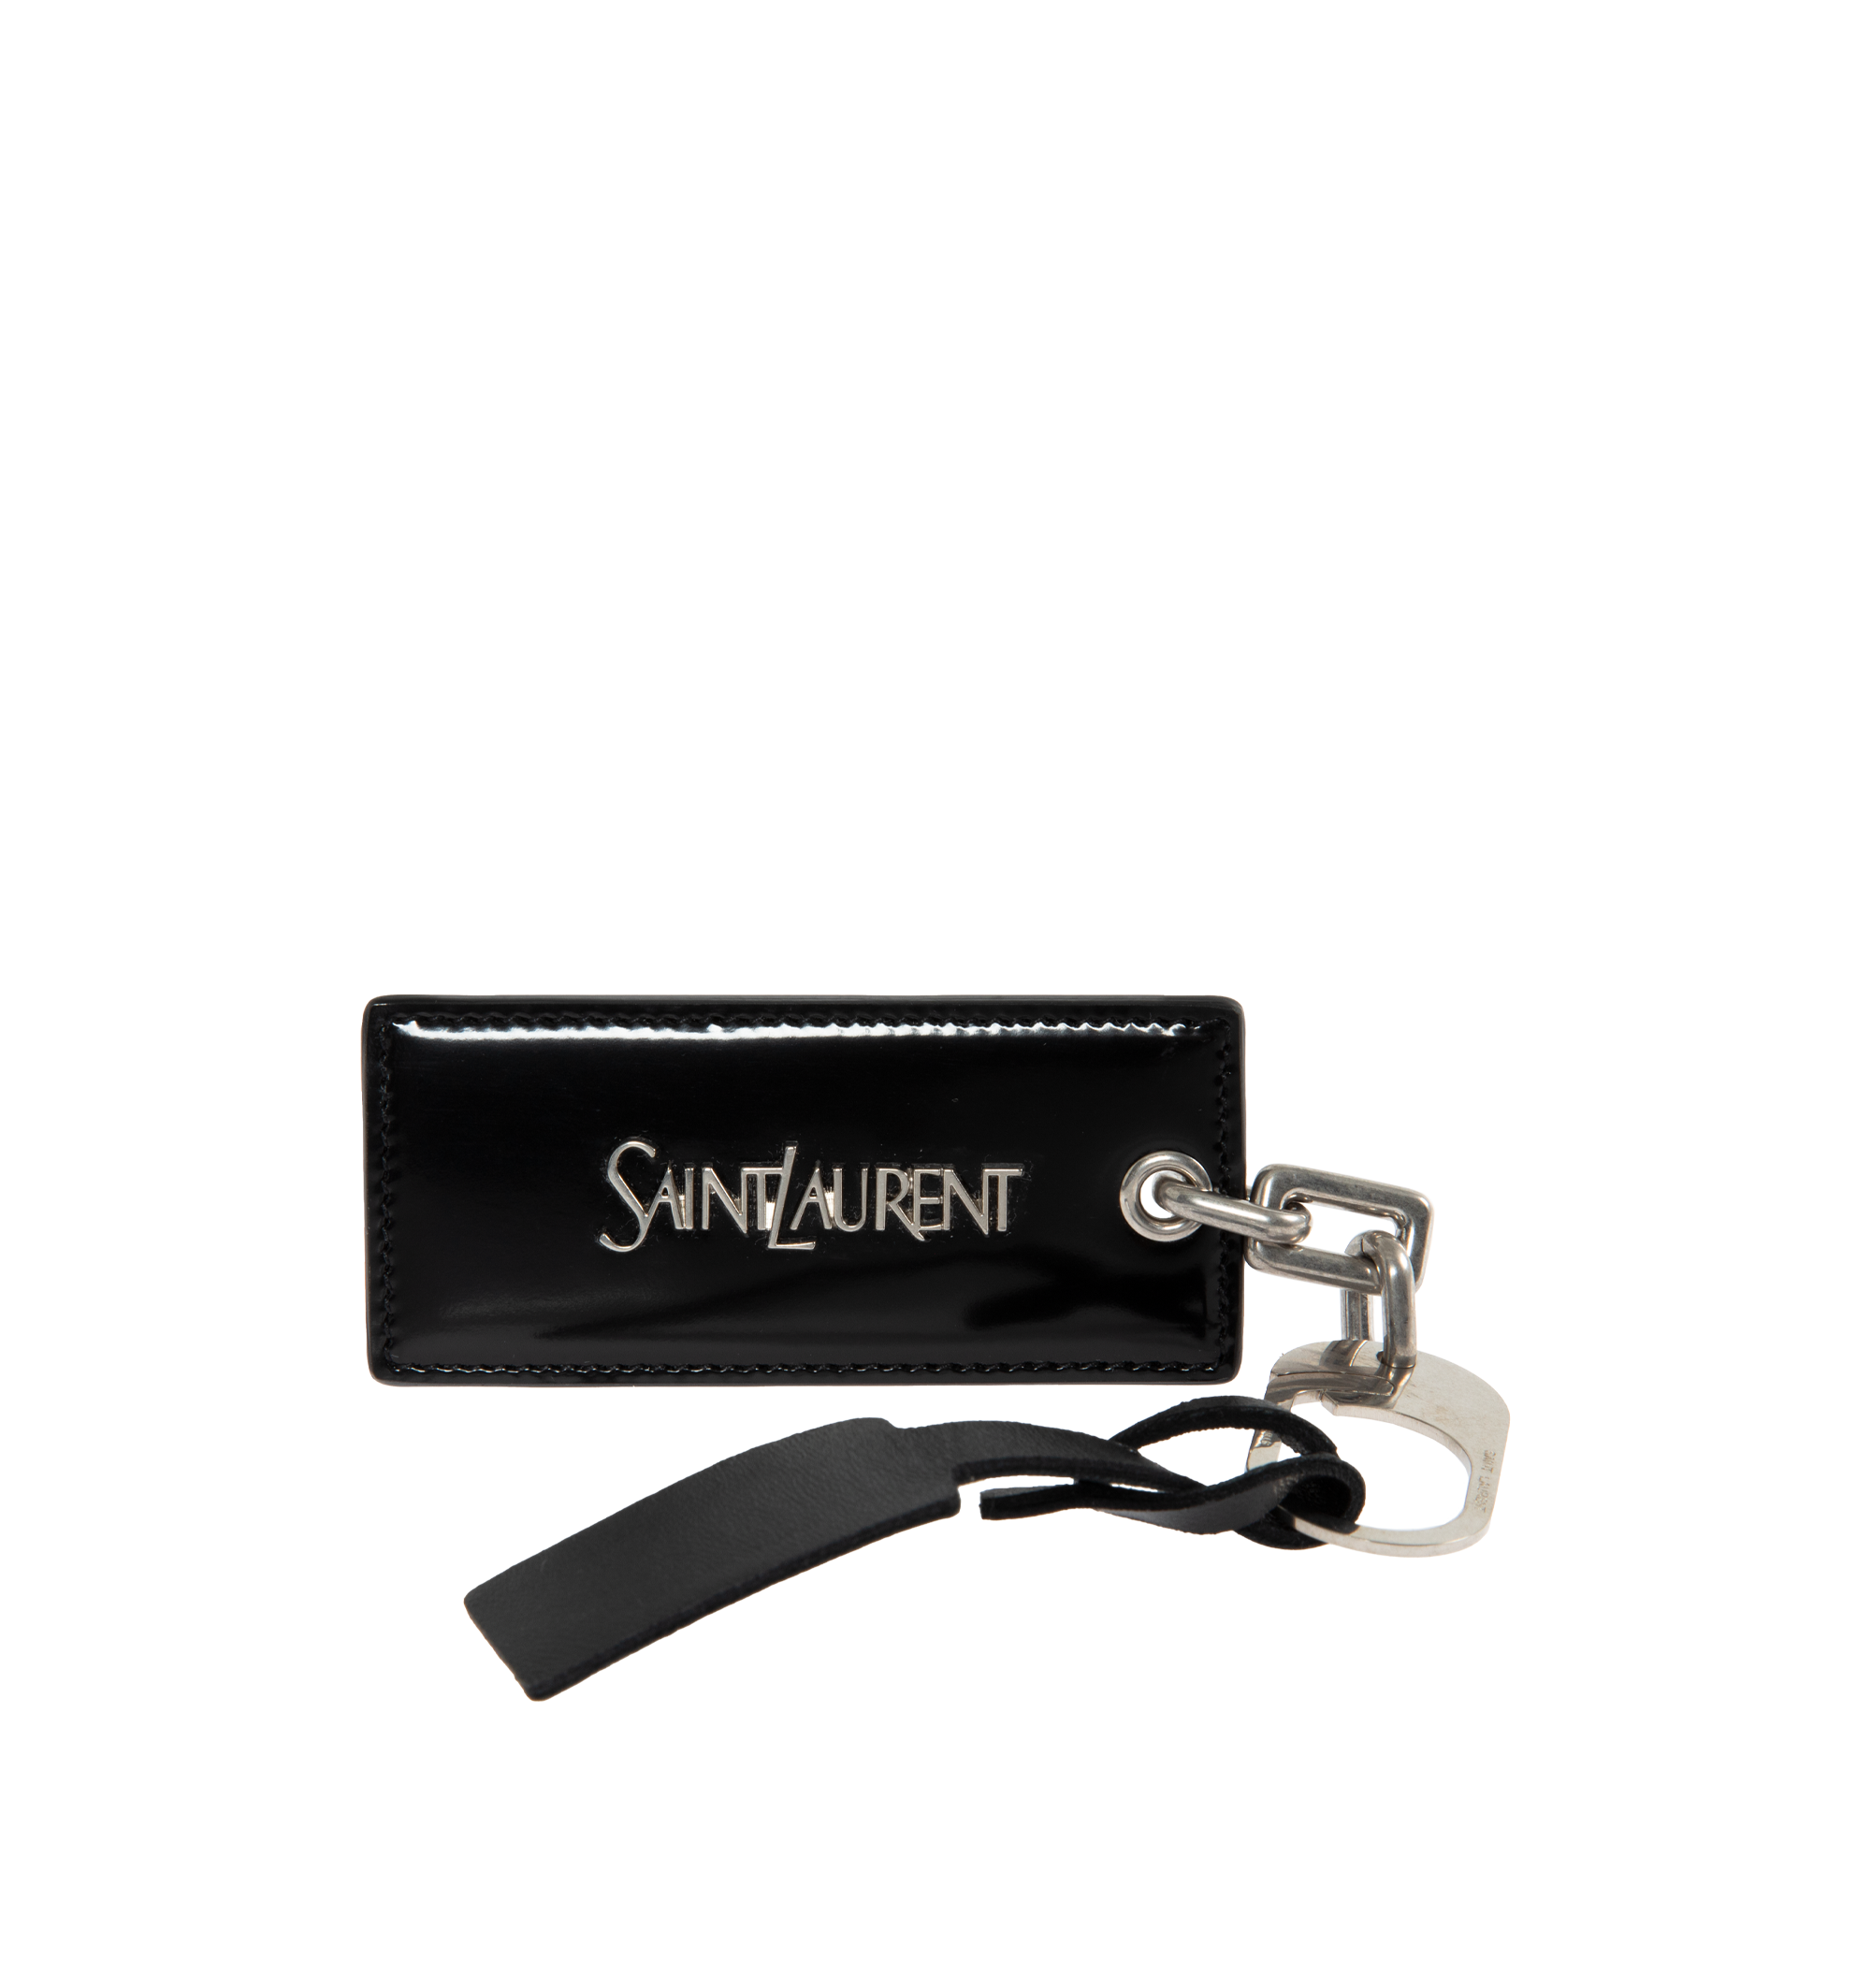 Yves Saint Laurent Black Leather Studded Monogram Tassel Key Ring and Bag  Charm - Yoogi's Closet